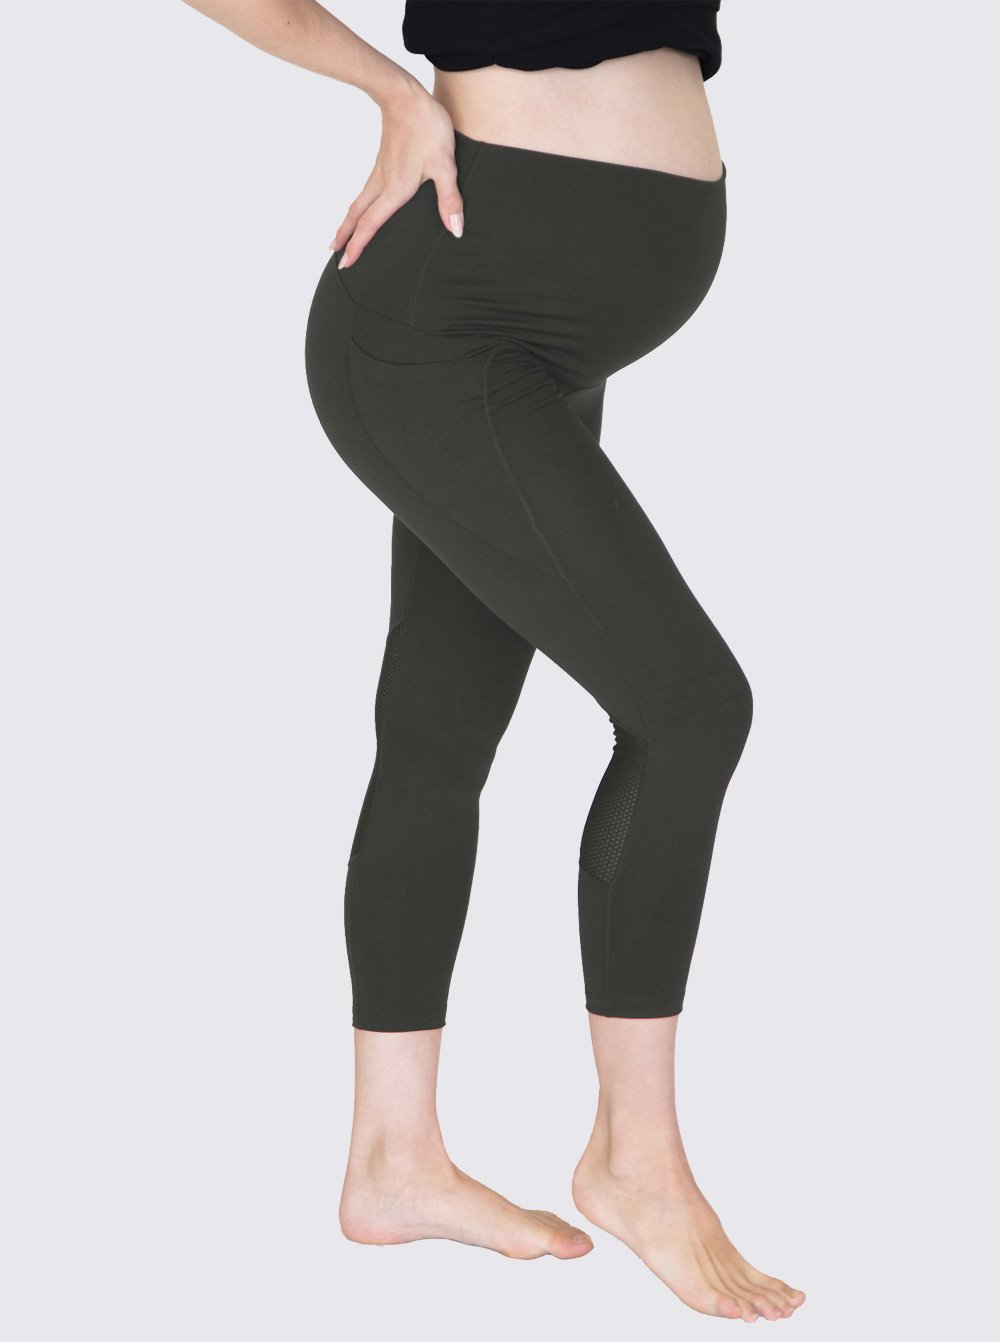 3/4 Length Olive Green Maternity Workout Legging – Angel Maternity USA